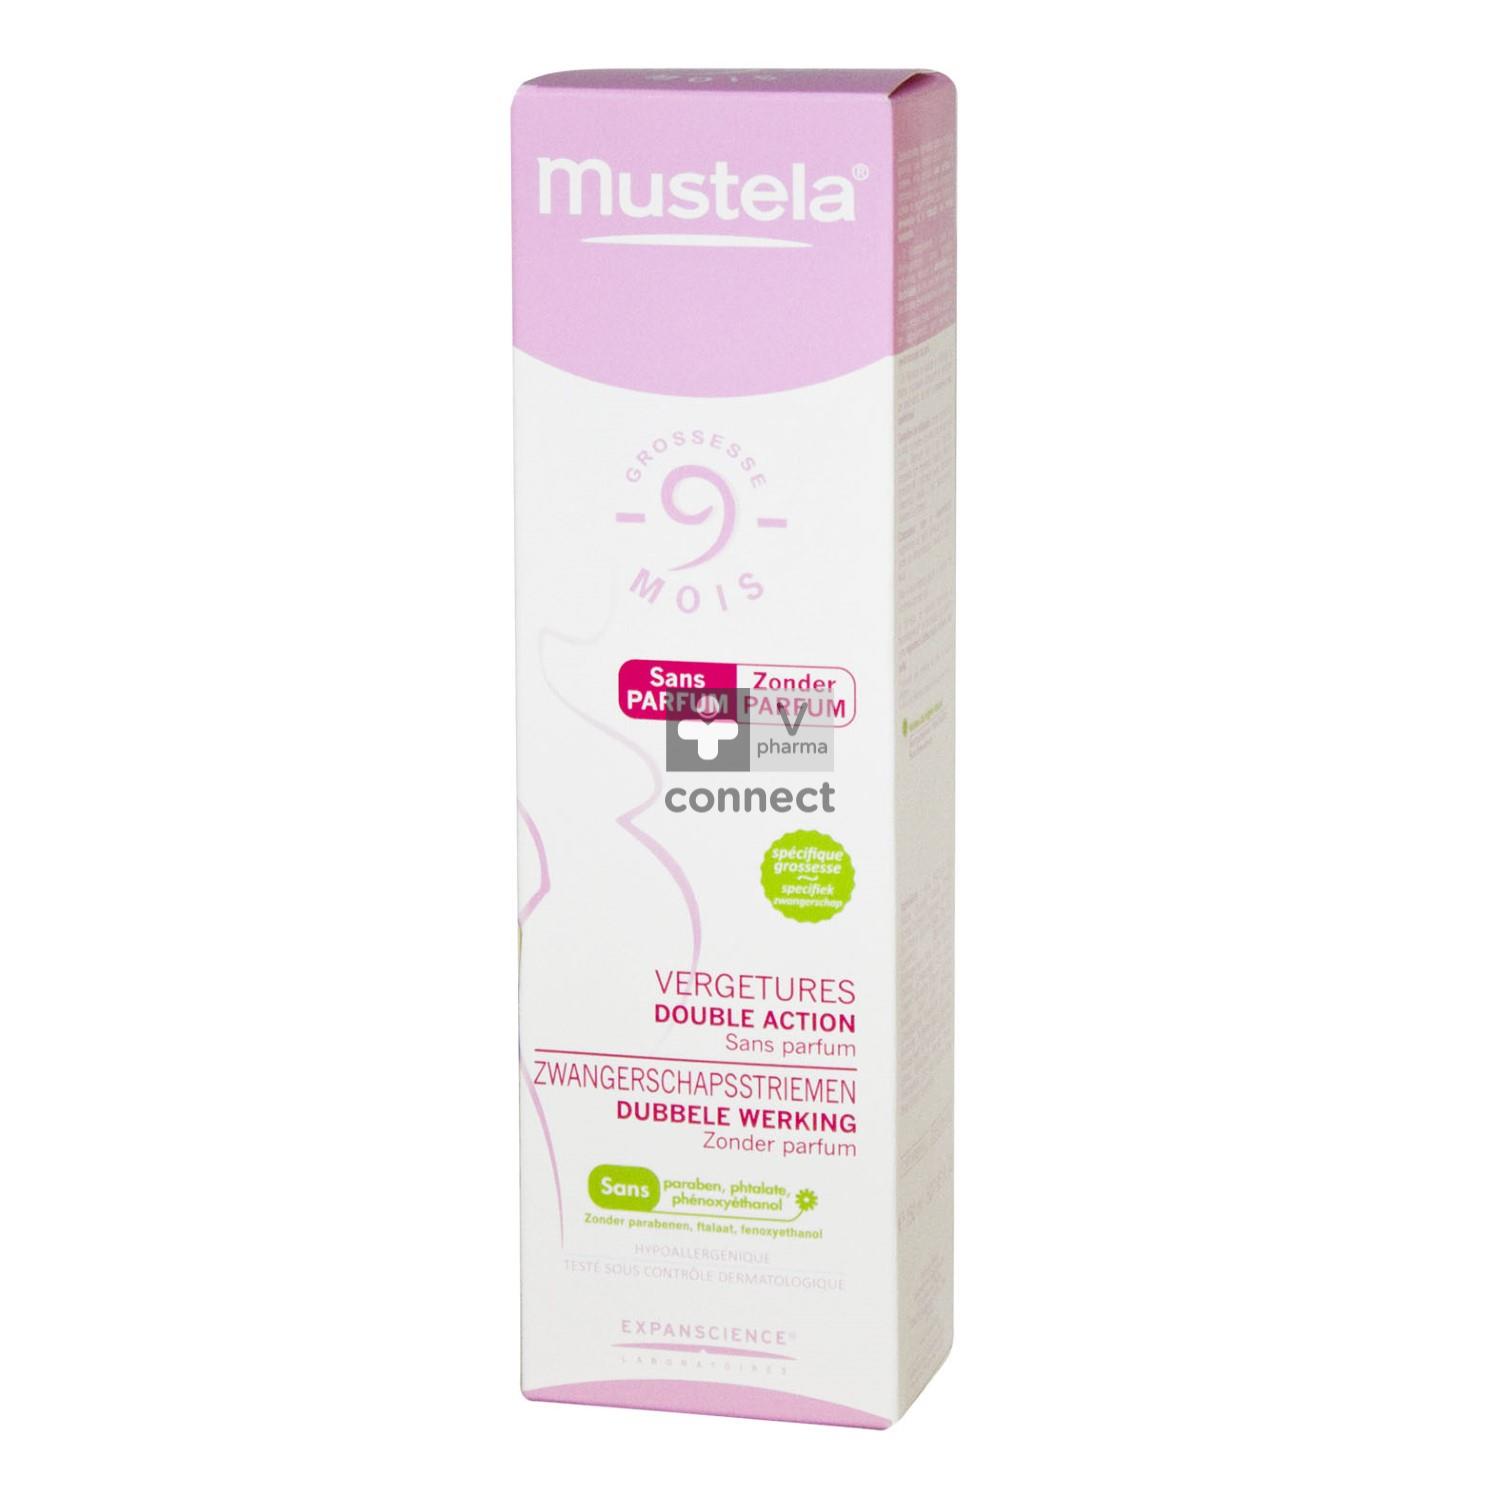 Mustela Crème Vergetures Double Action 9 Mois 150 ml